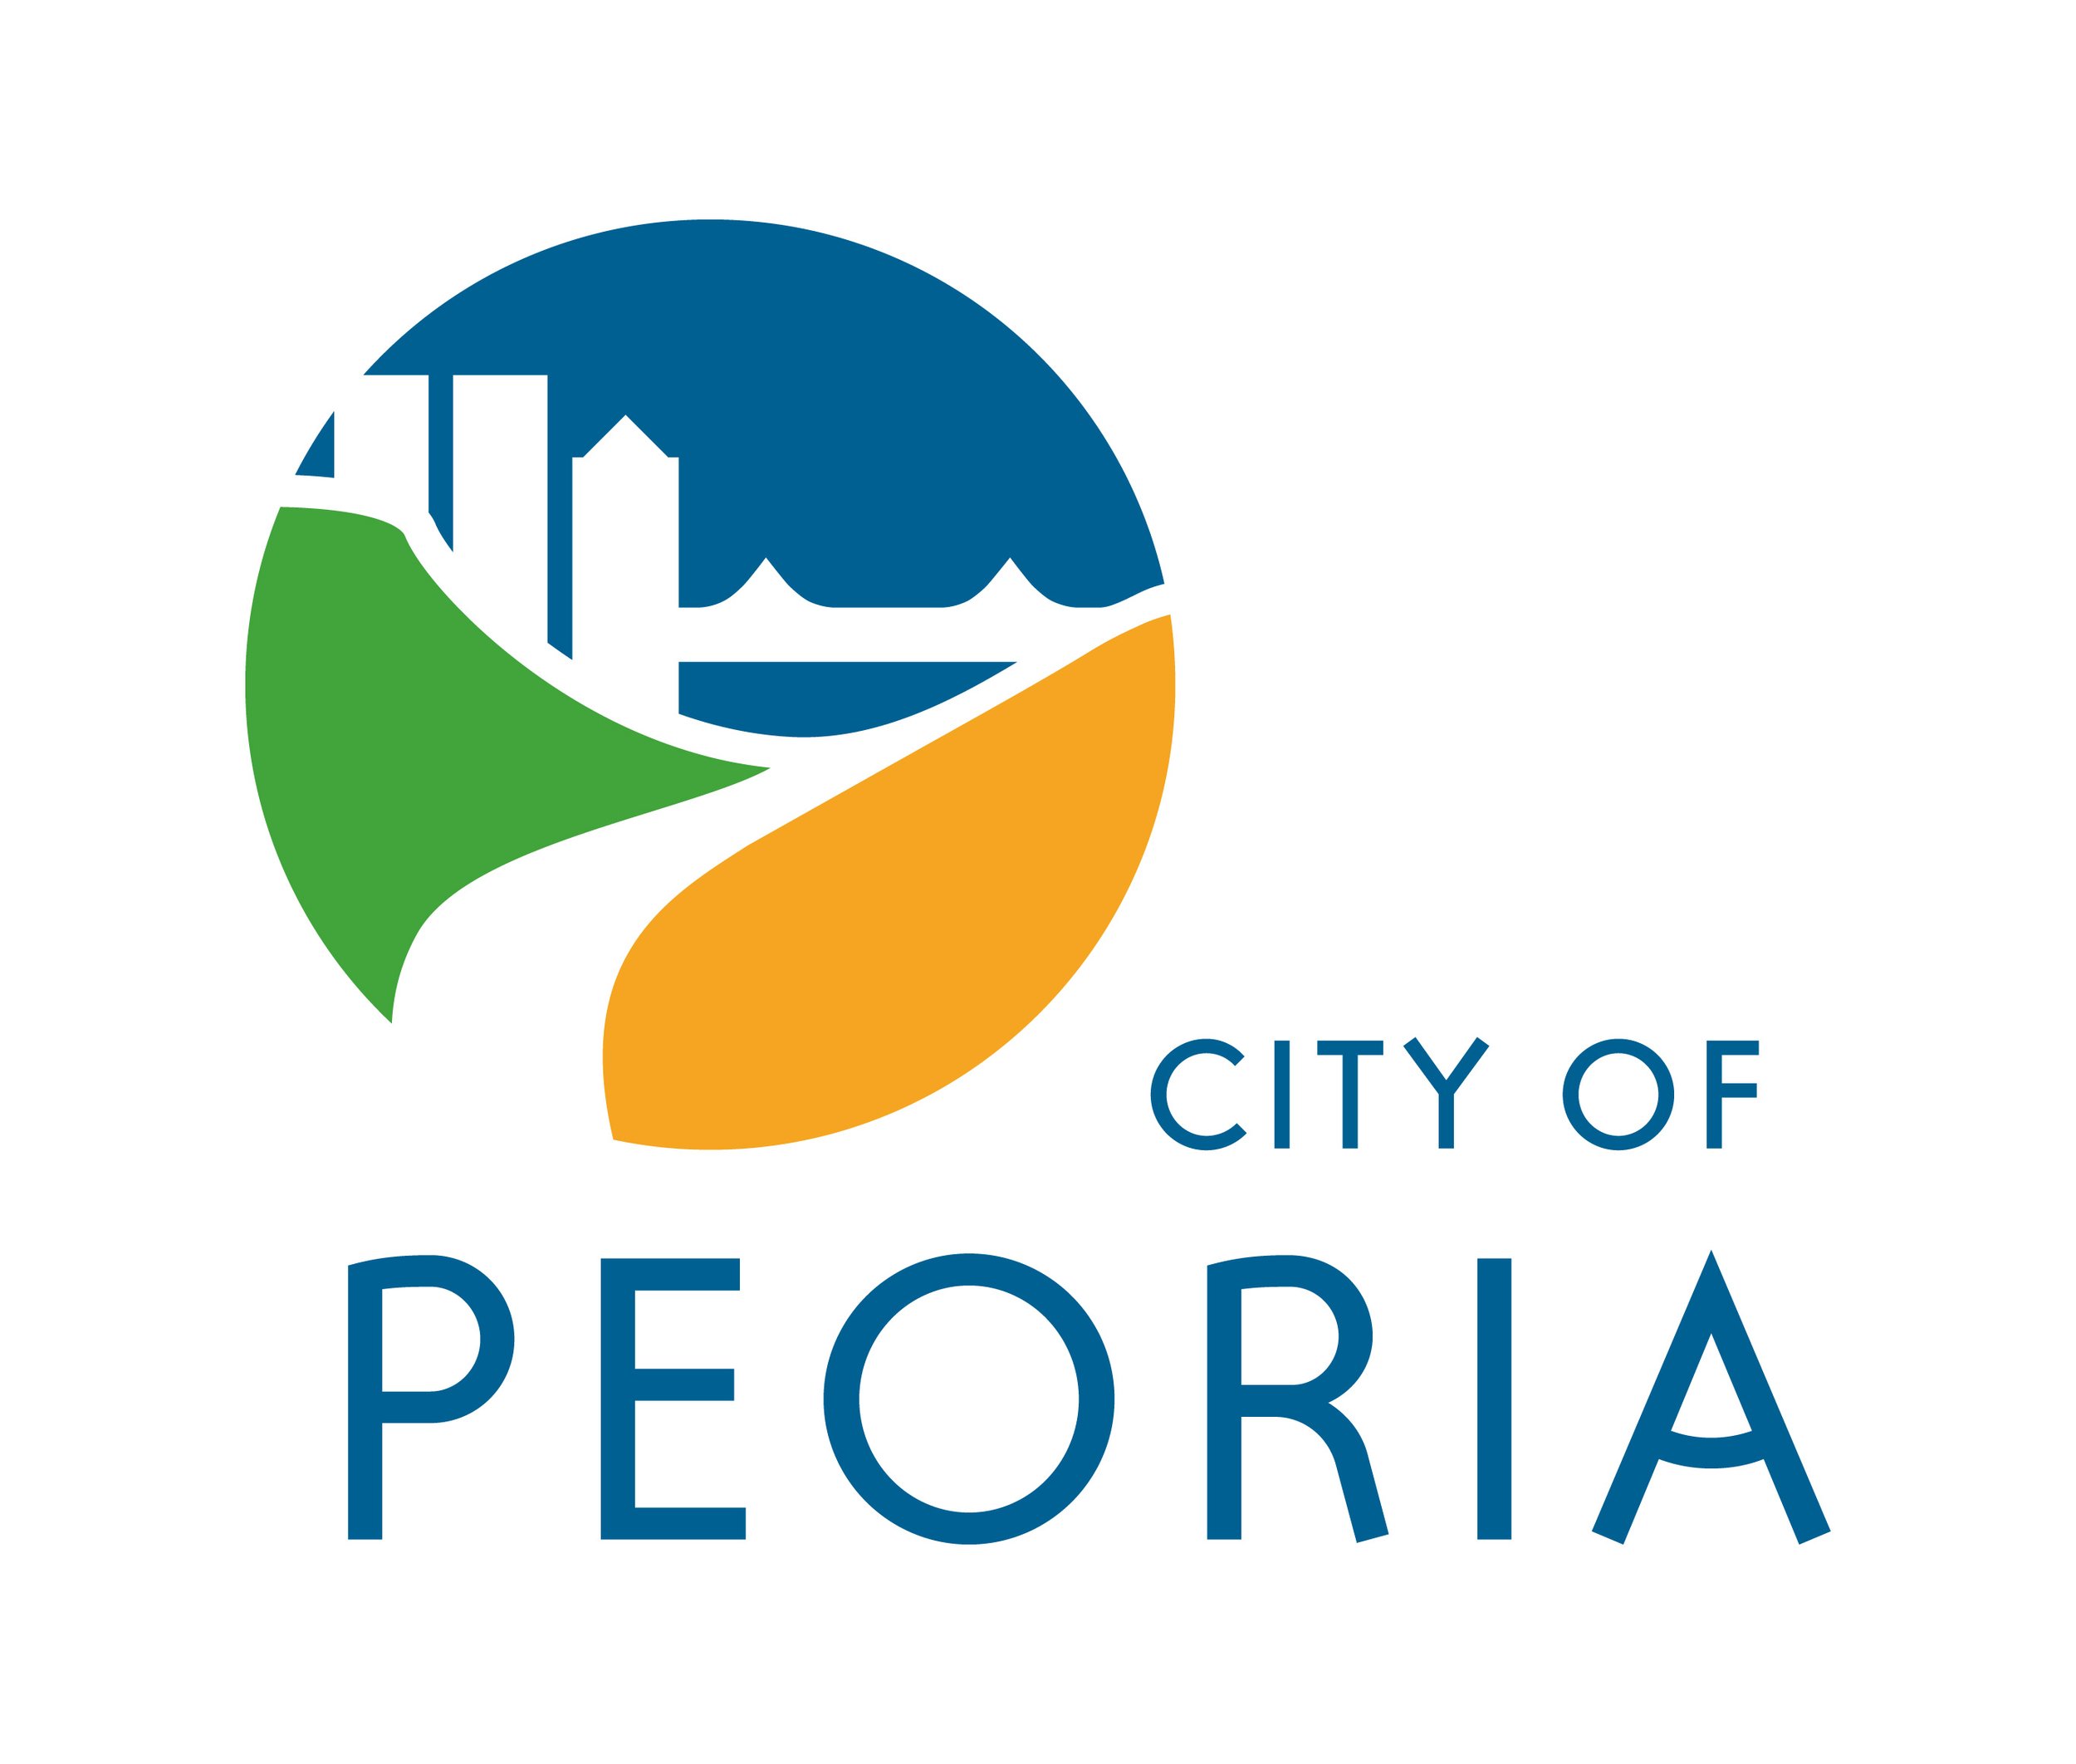 City of Peoria.jpg